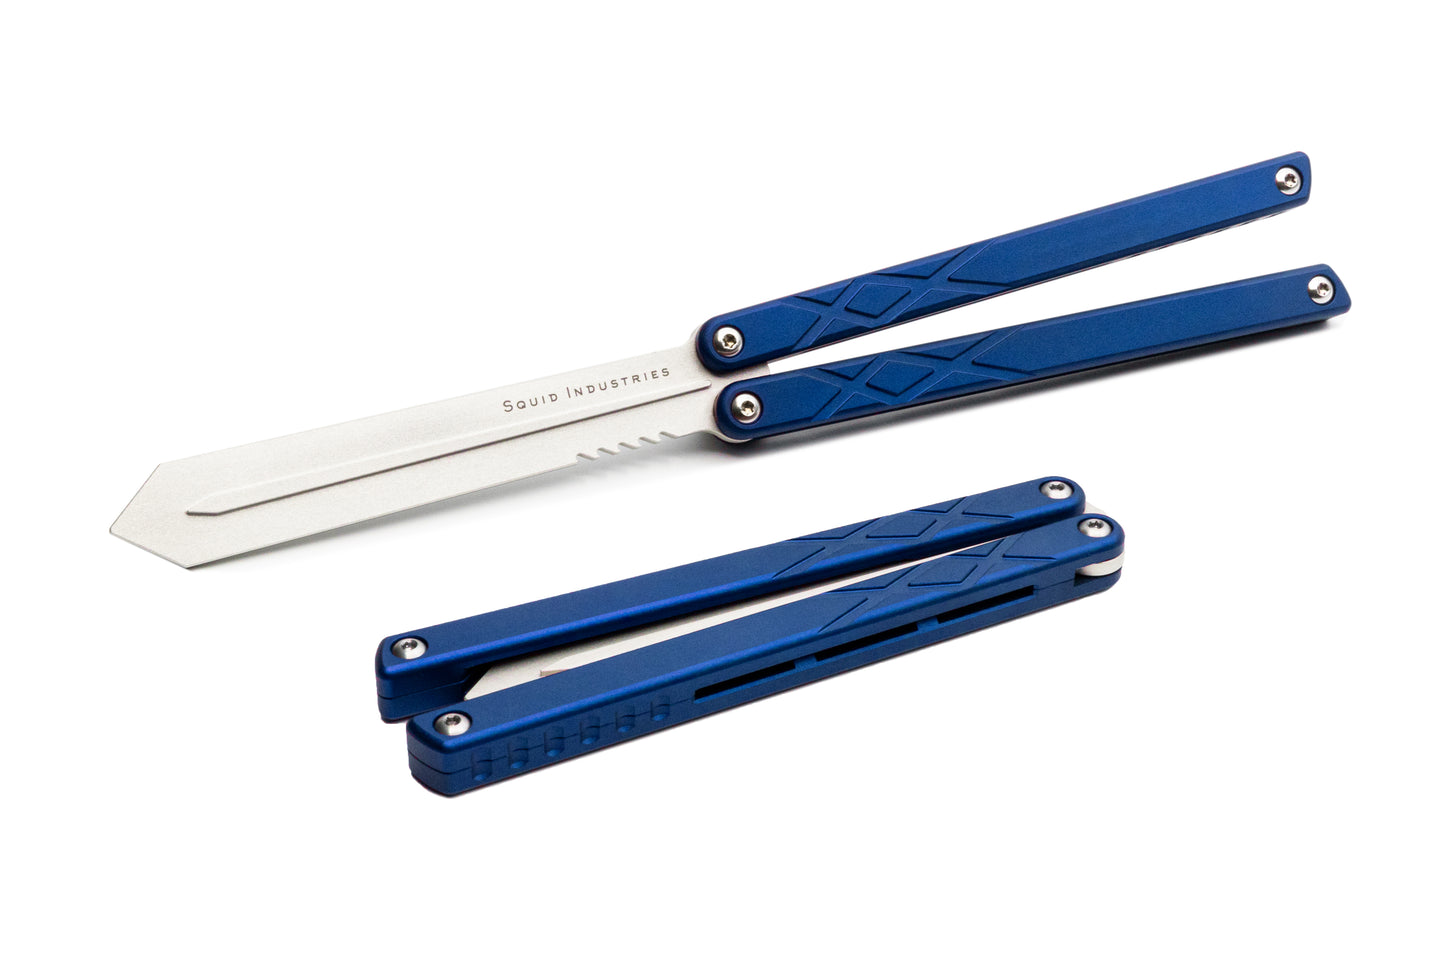 silver blade blue handles silver hardware swordfish balisosng butterfly knife trainer fidget toy